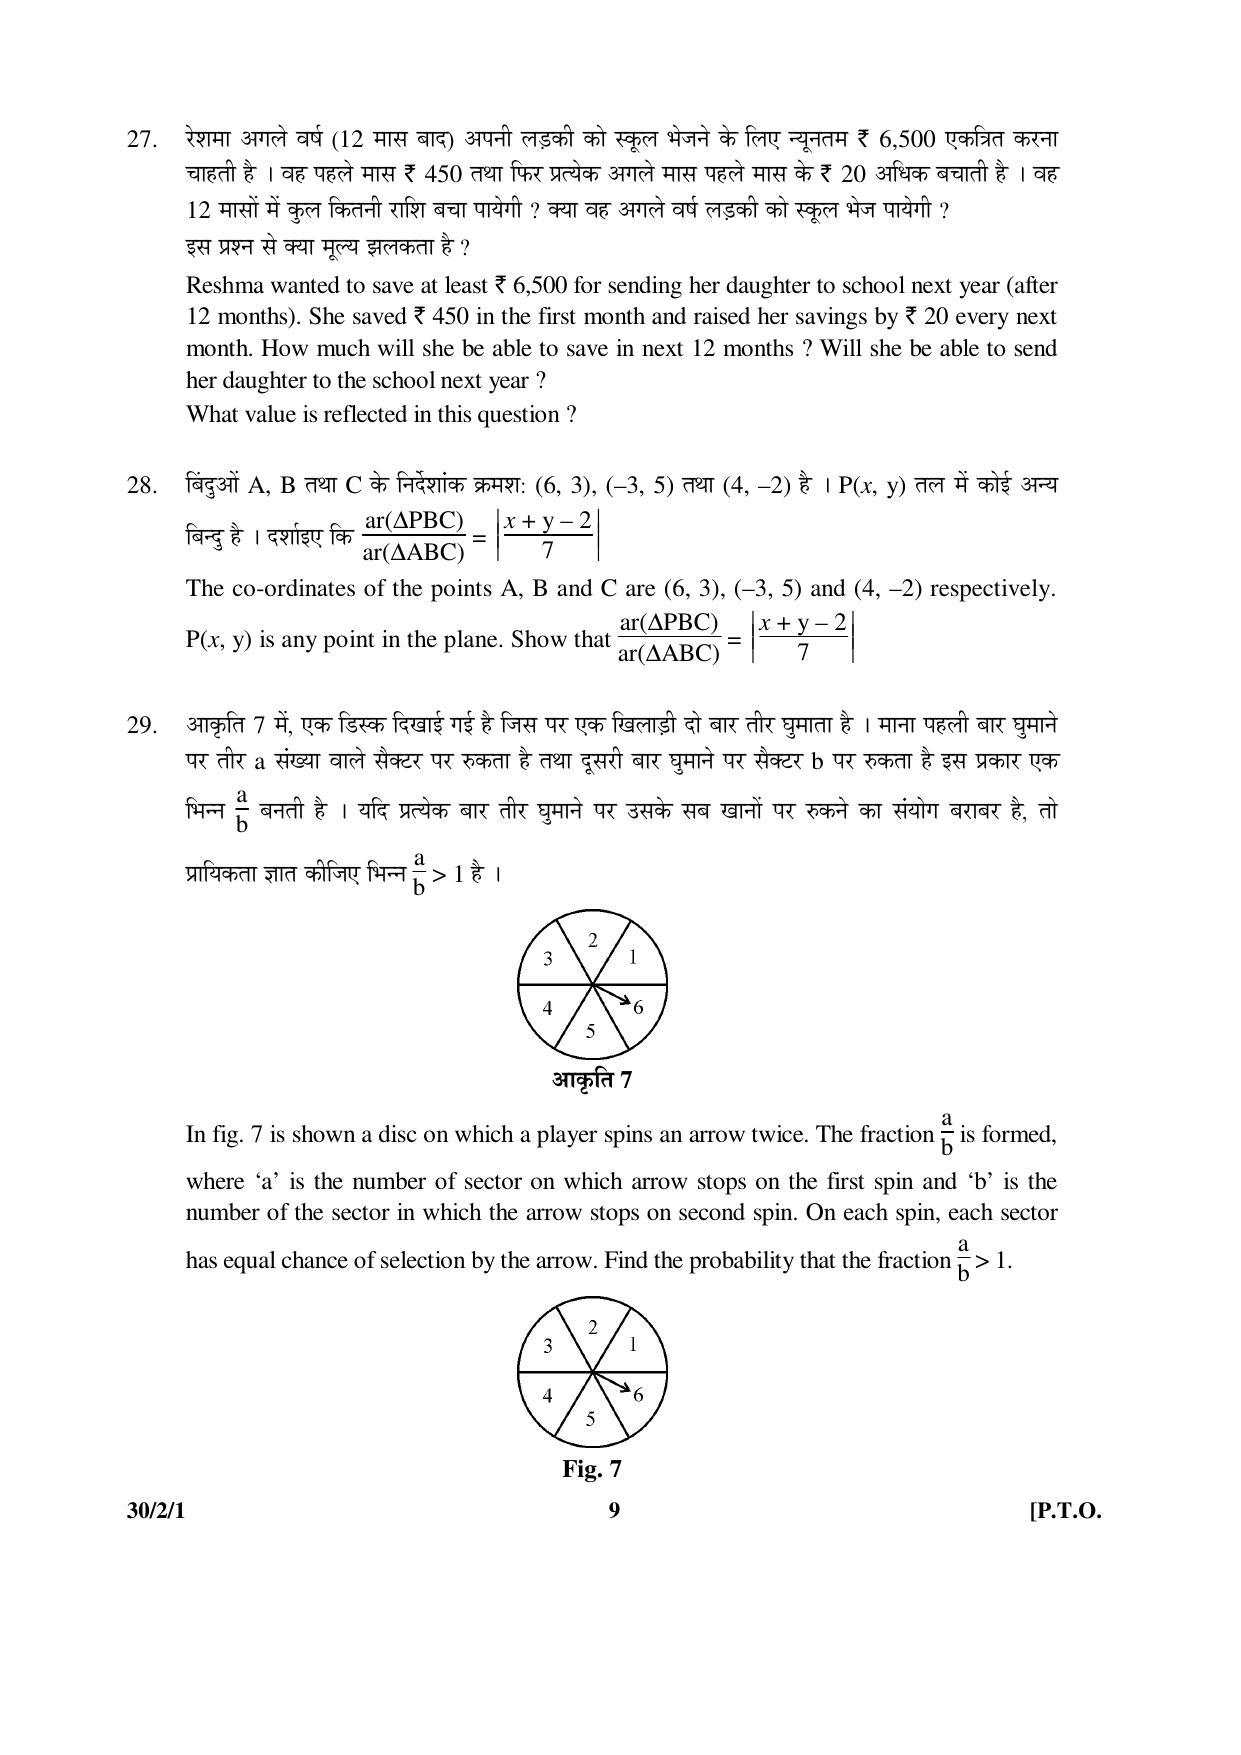 CBSE Class 10 30-2-1 _Mathematics 2016 Question Paper - Page 9